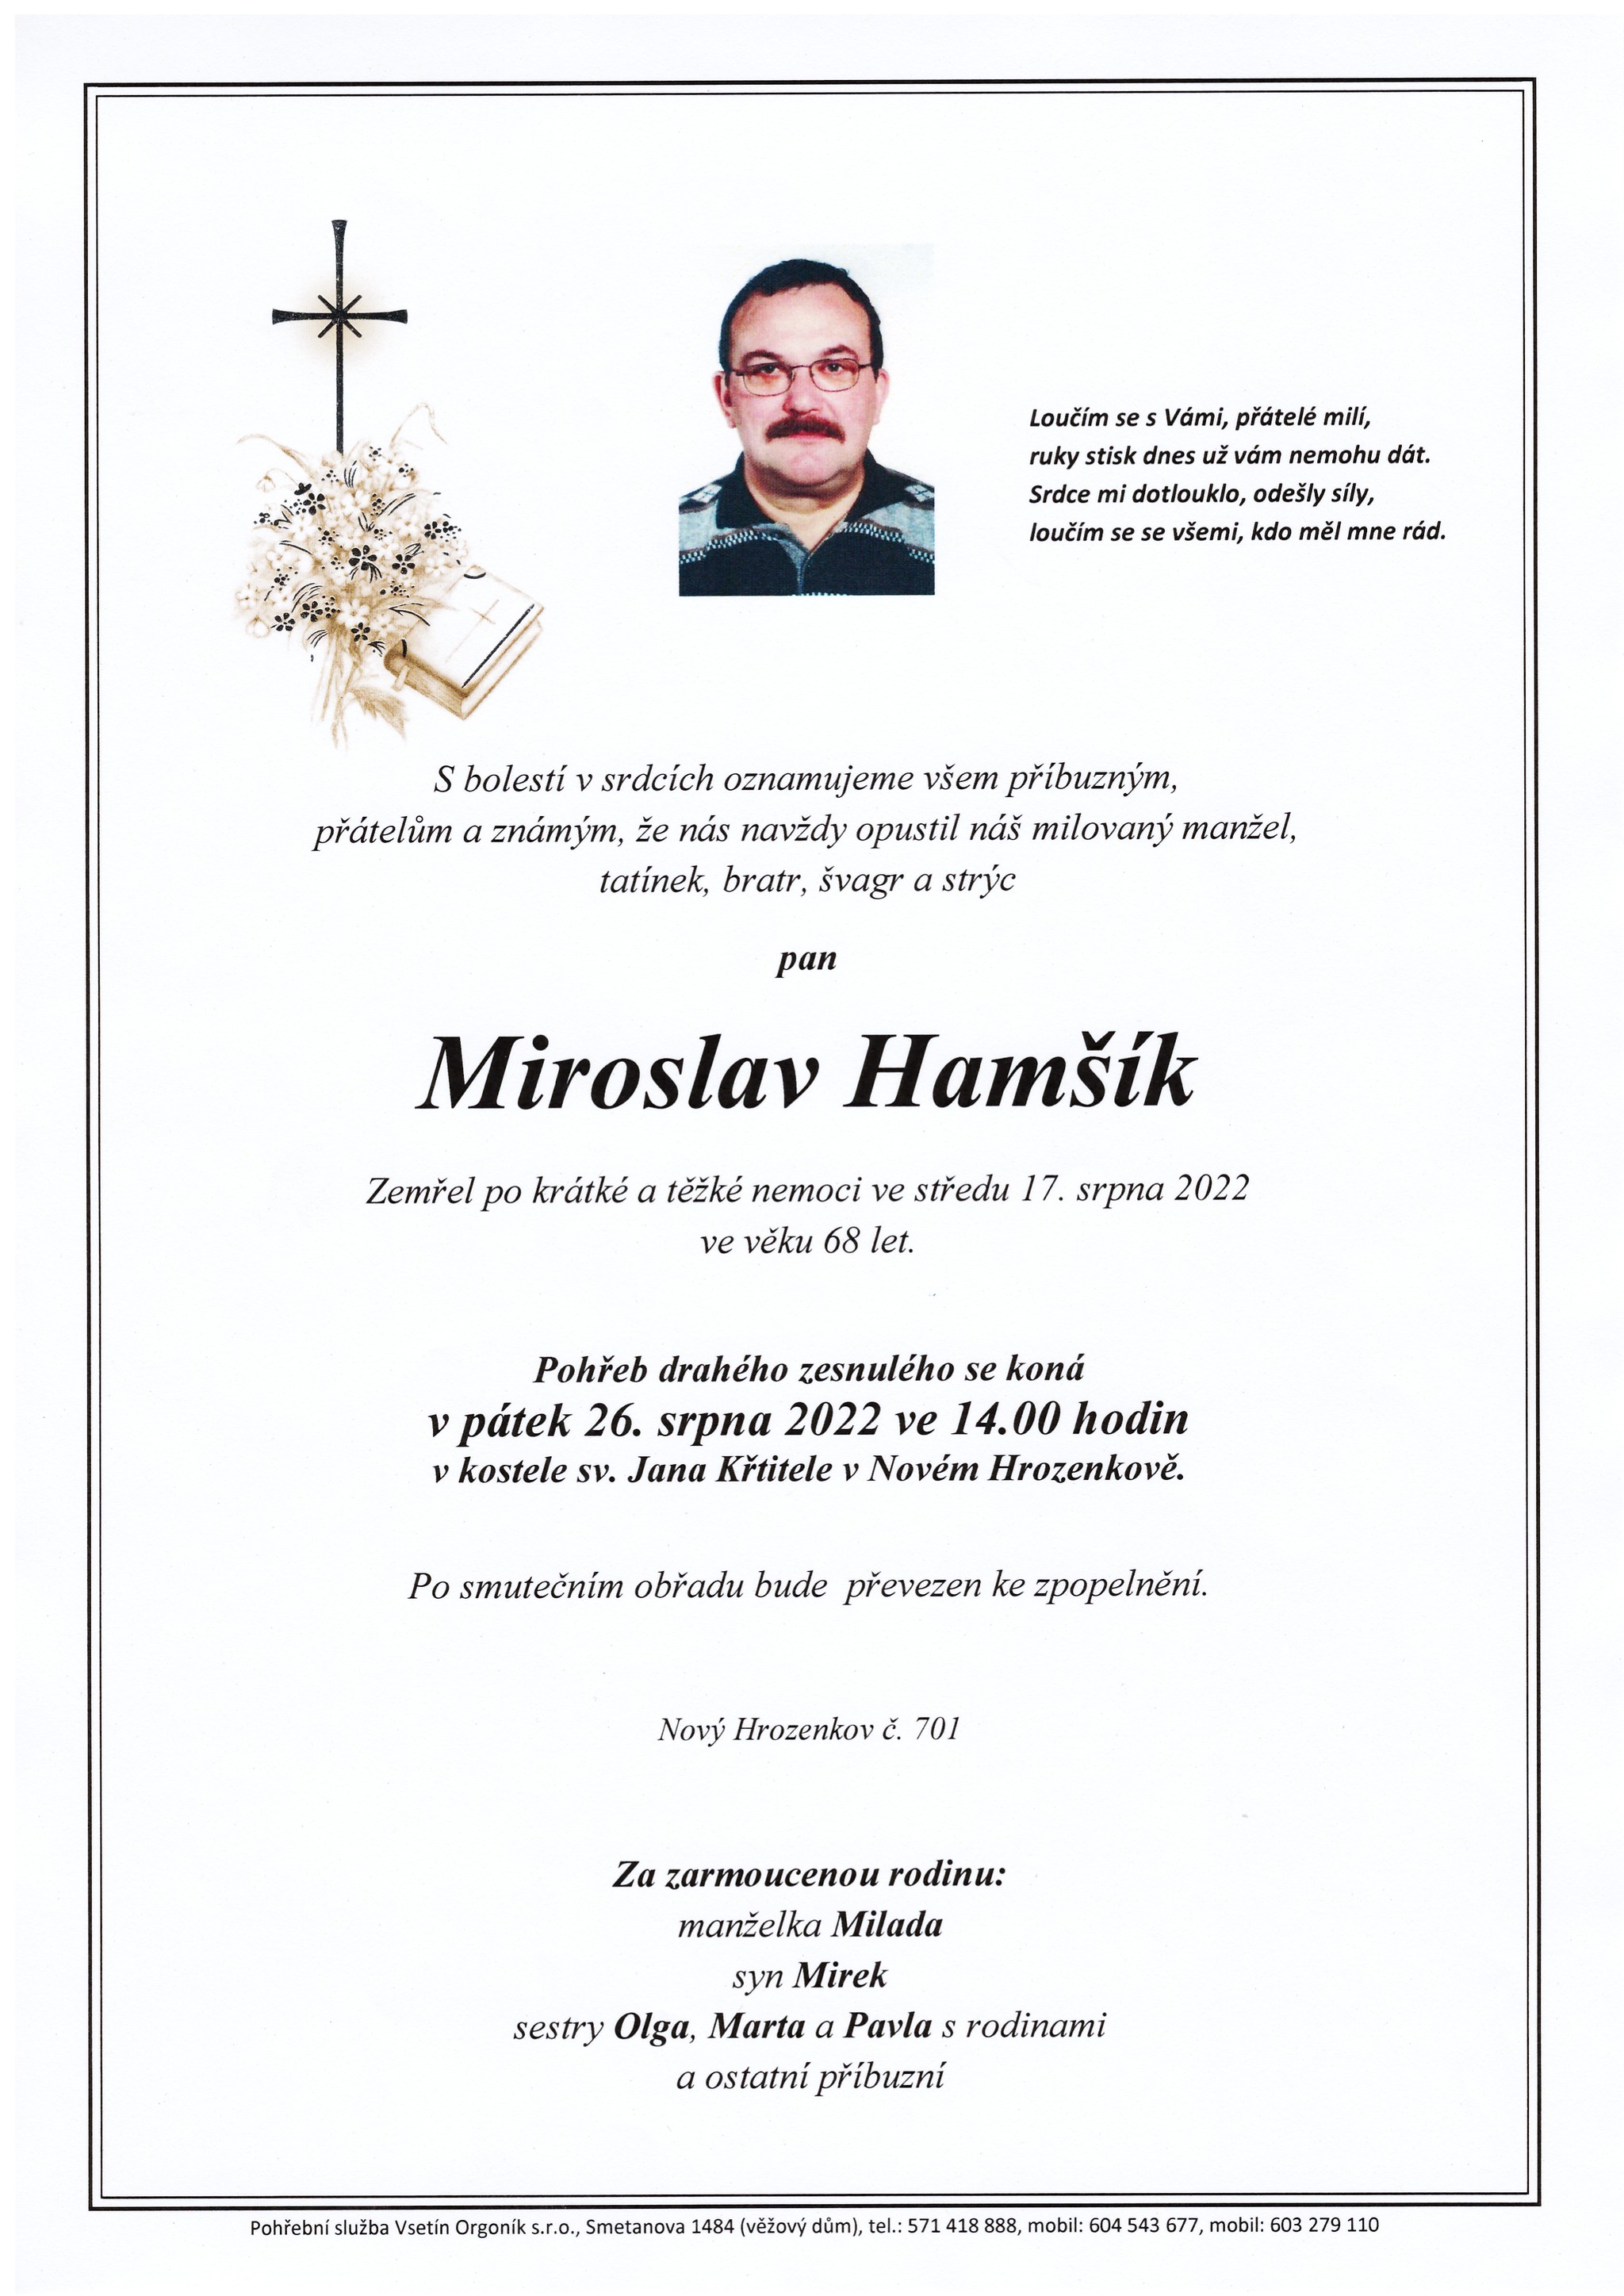 Miroslav Hamšík